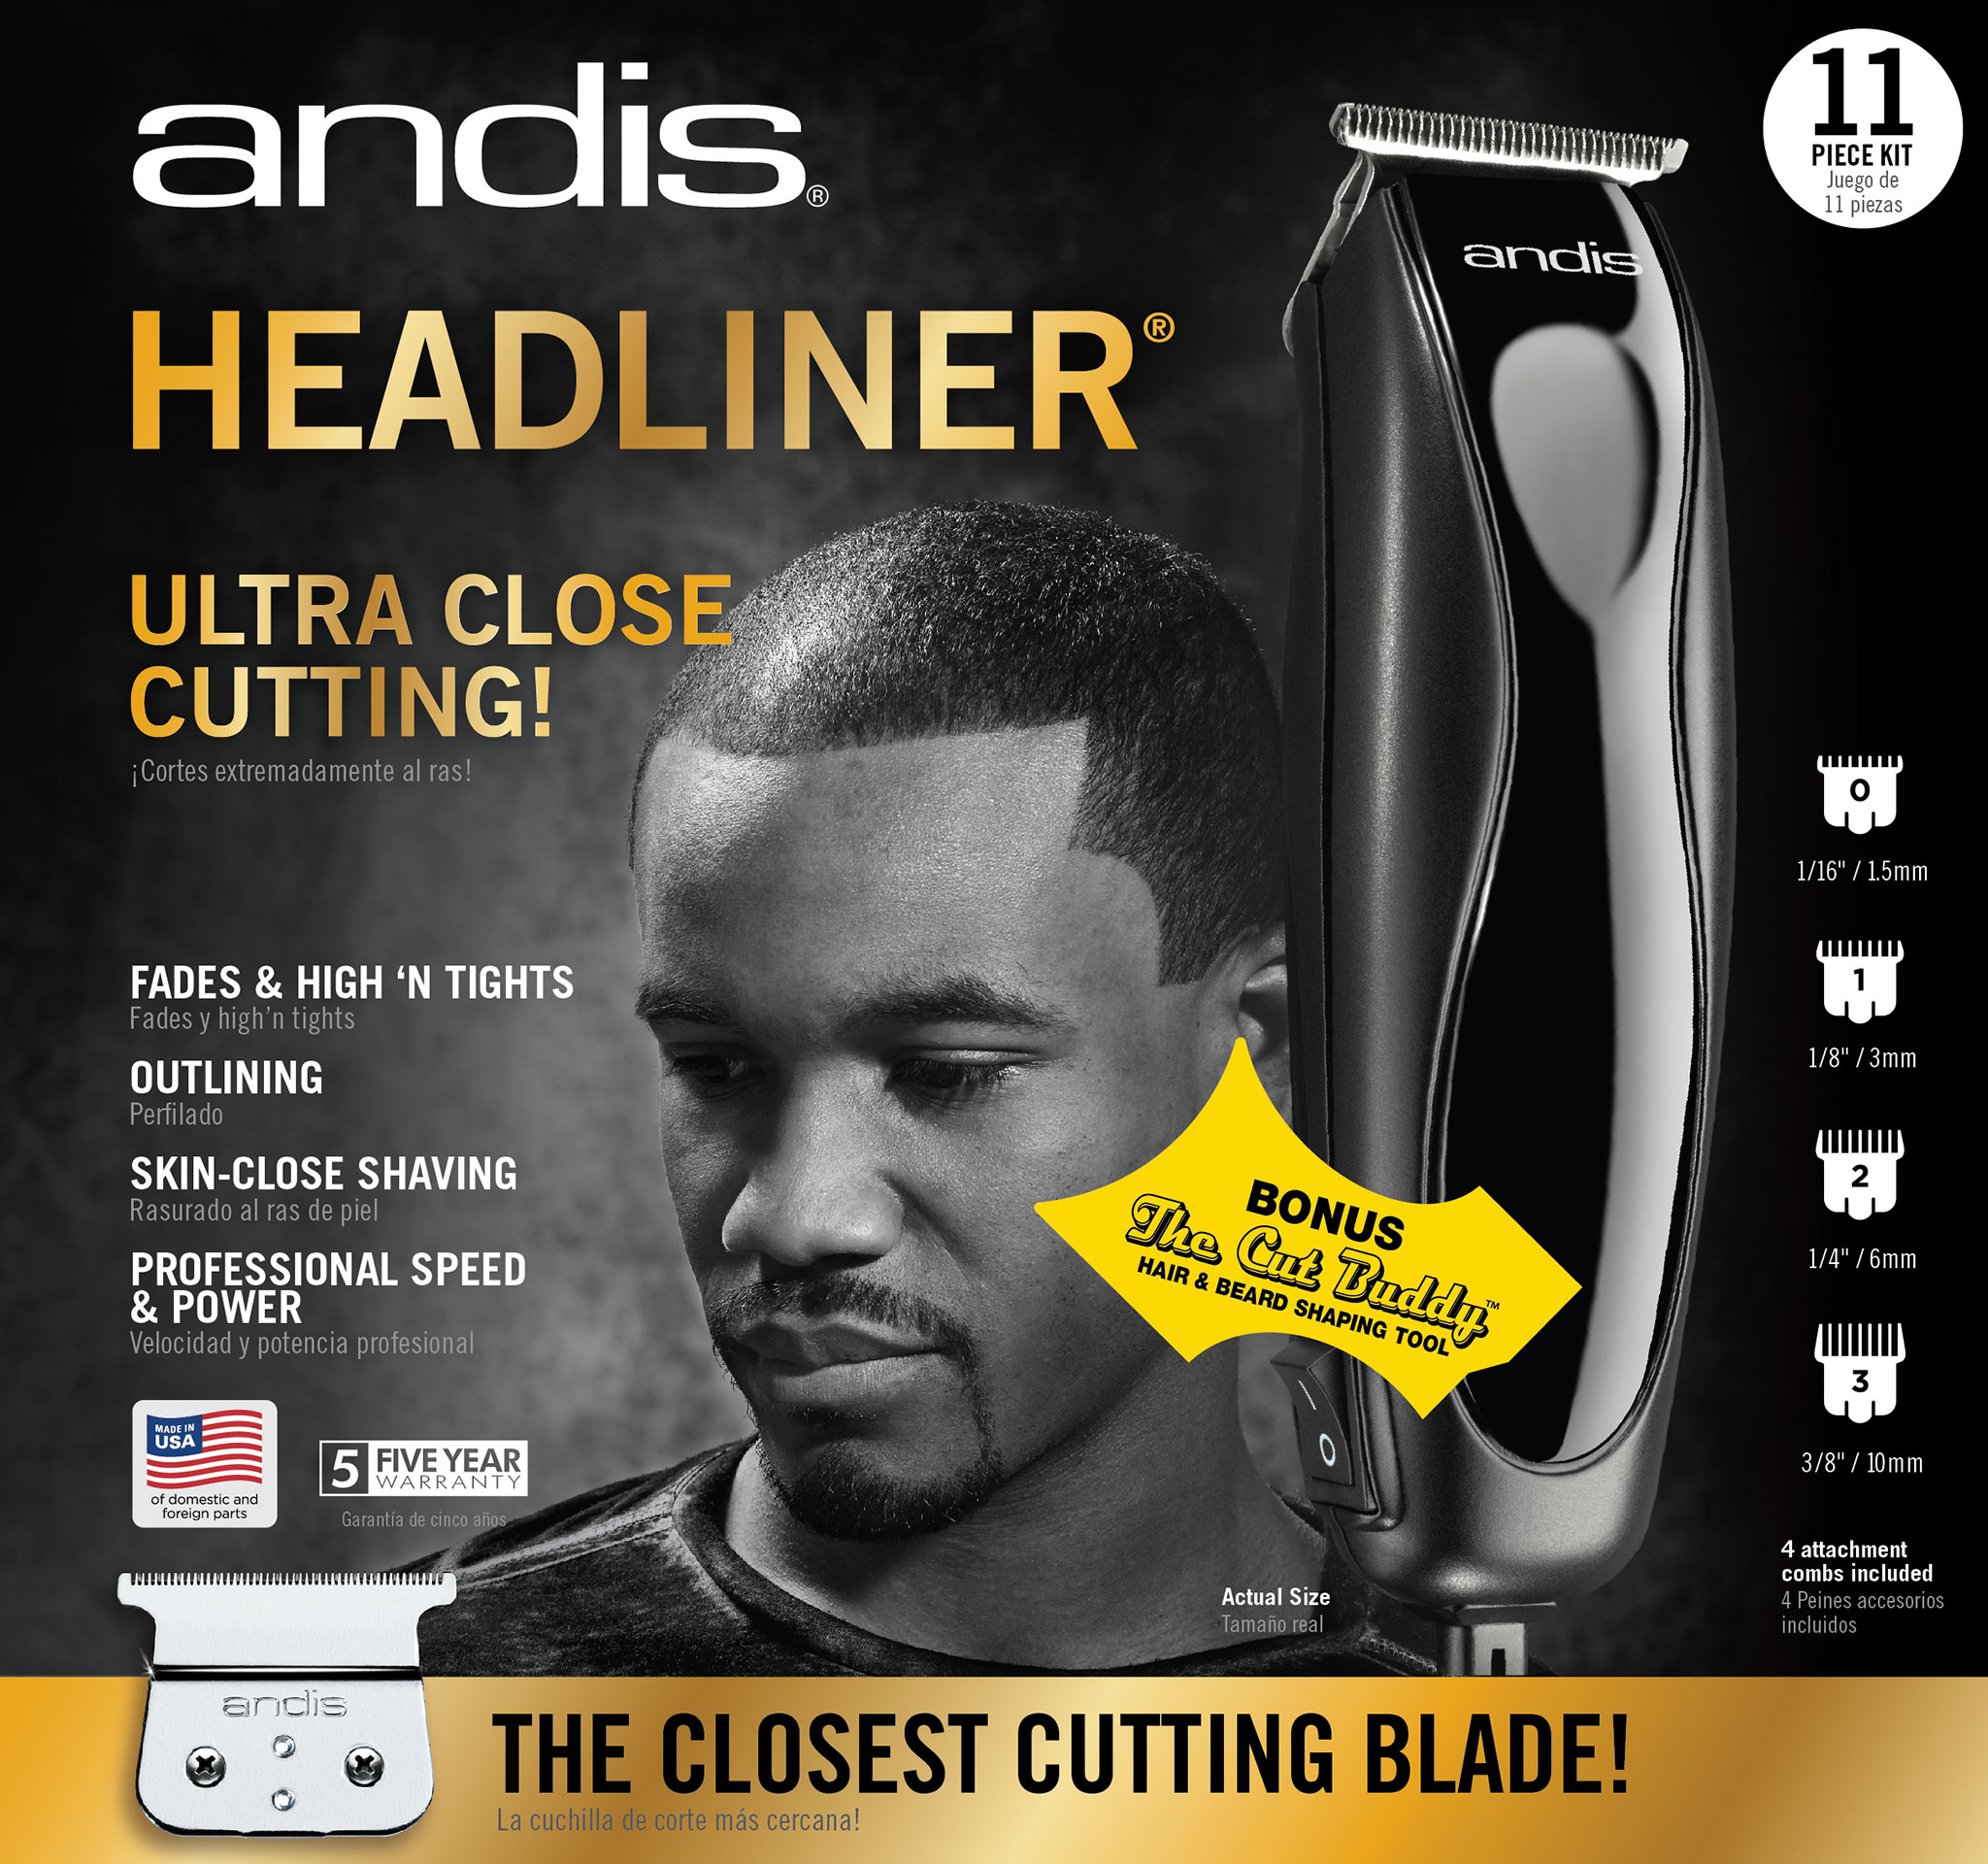 Andis Headliner Home Haircutting Kit, 11 piece Kit with Bonus The Cut Buddy - image 3 of 5